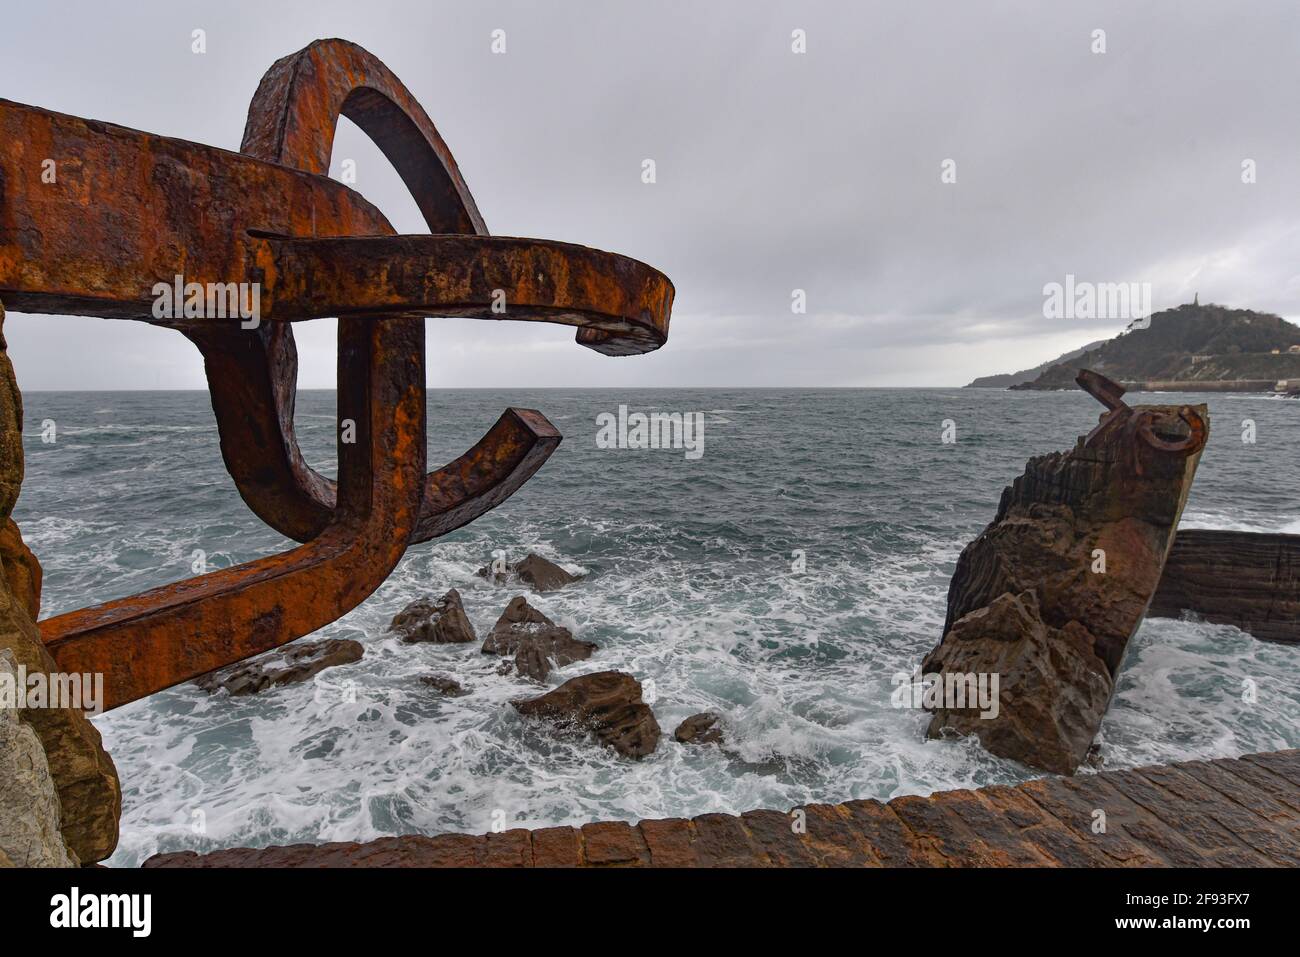 San Sebastian, Spain - Dec 25, 2020: Peine del Viento (Comb of the Sea) sculpture on the coast in San Sebastian, Spain Stock Photo